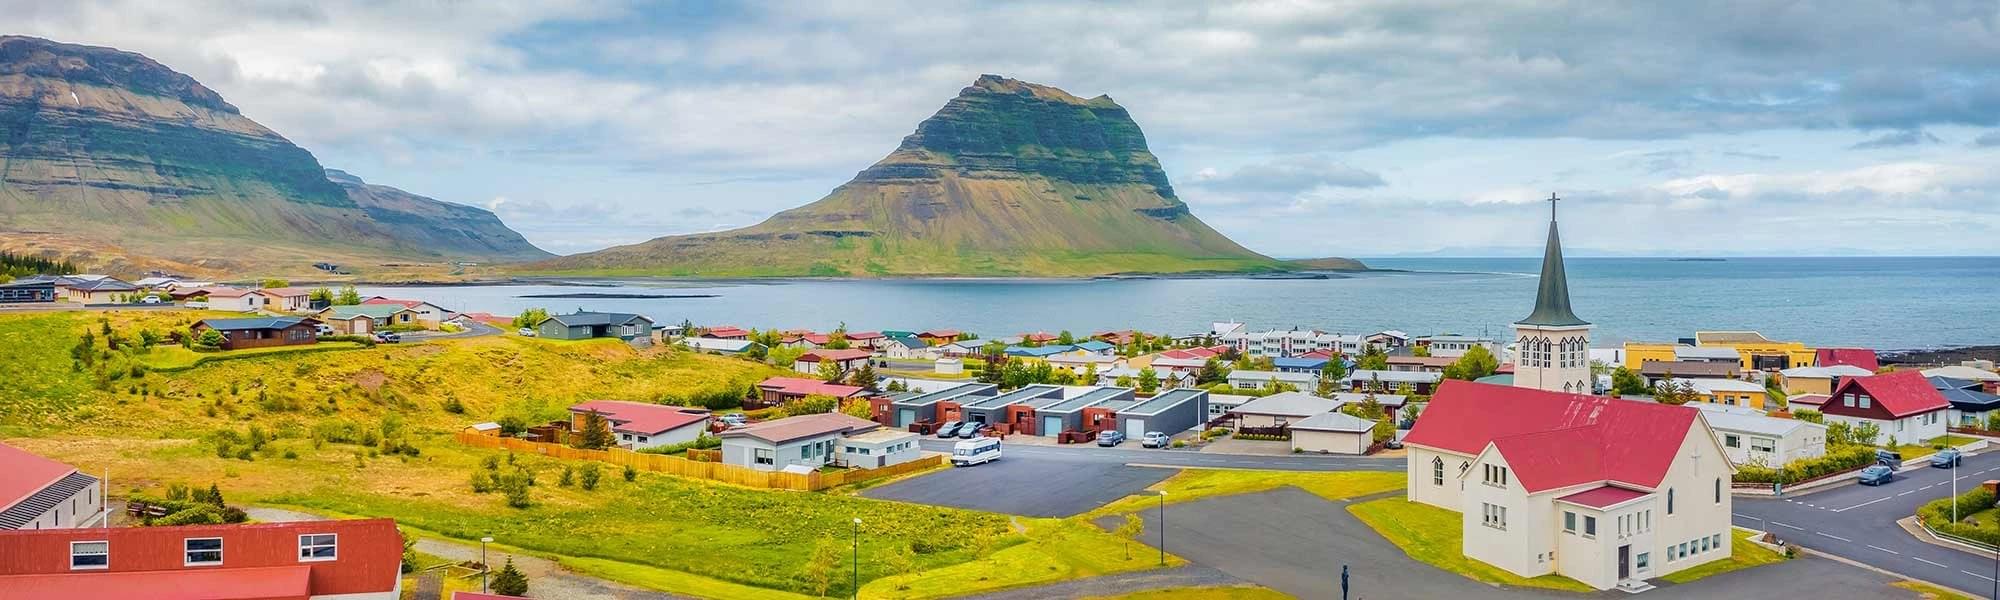 Grundarfjordur, Iceland Overview